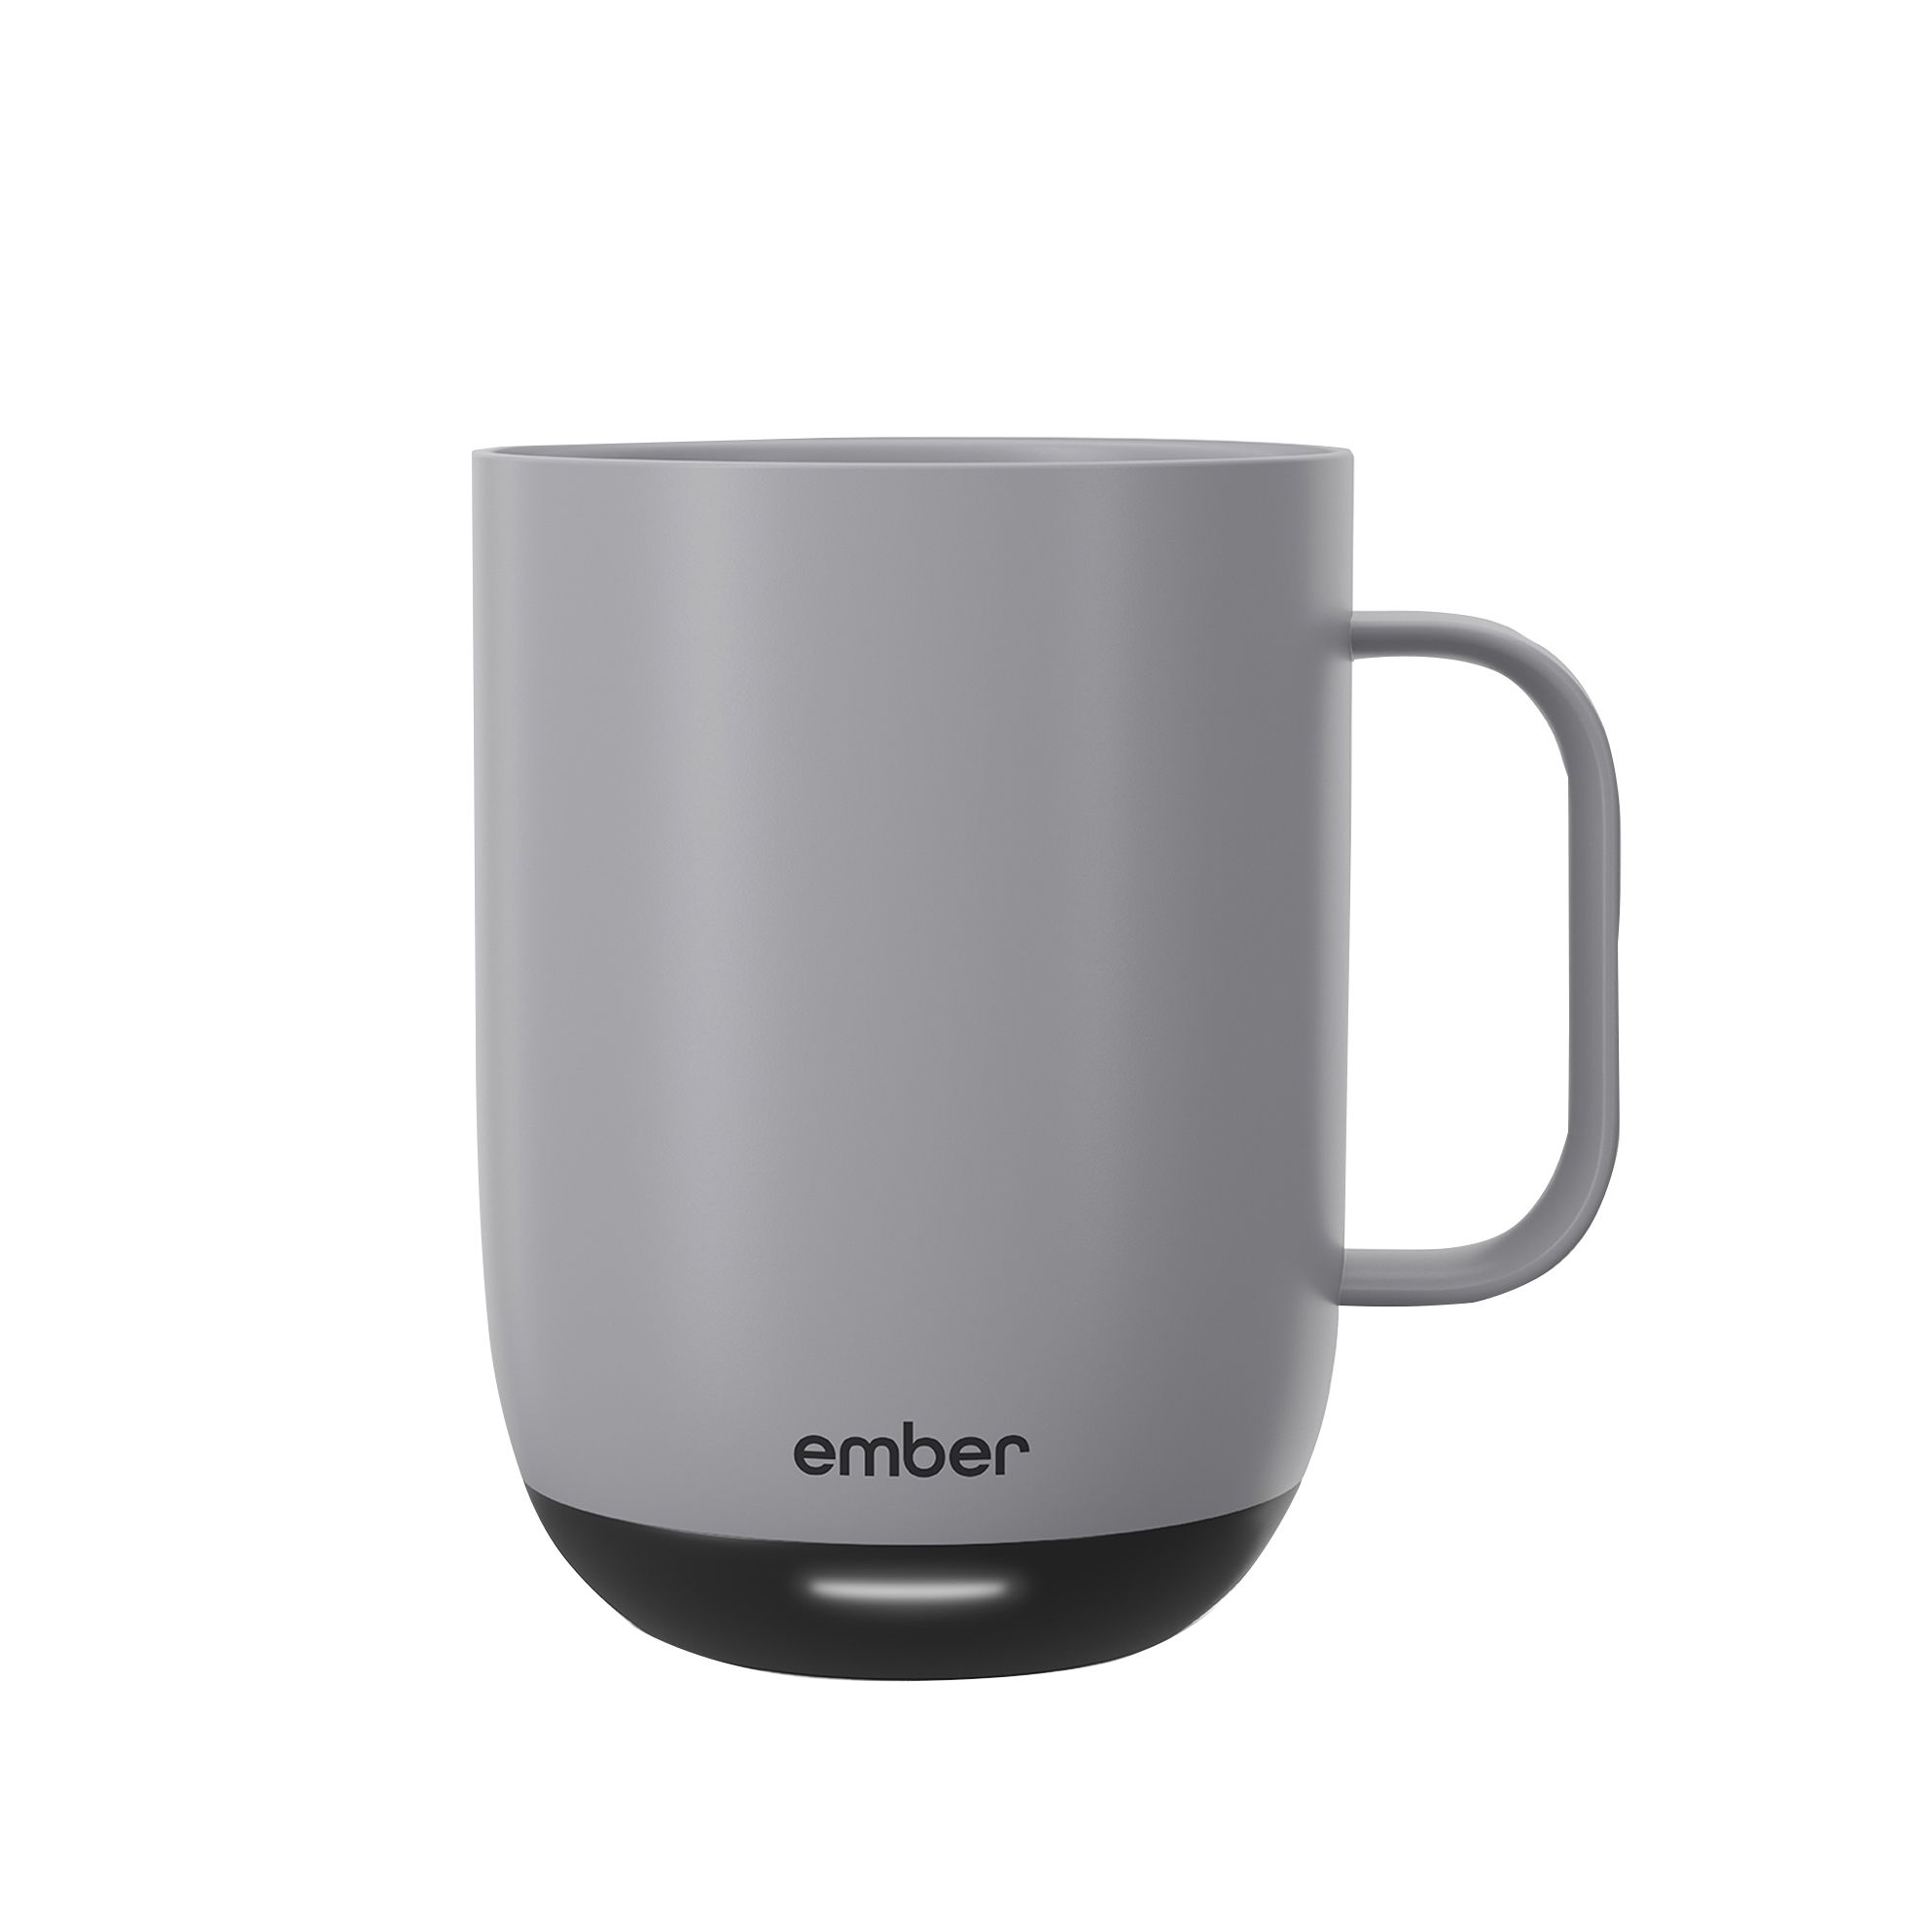 Ember Temperature Control Mug Review - Best Self-Heating Mug for Coffee